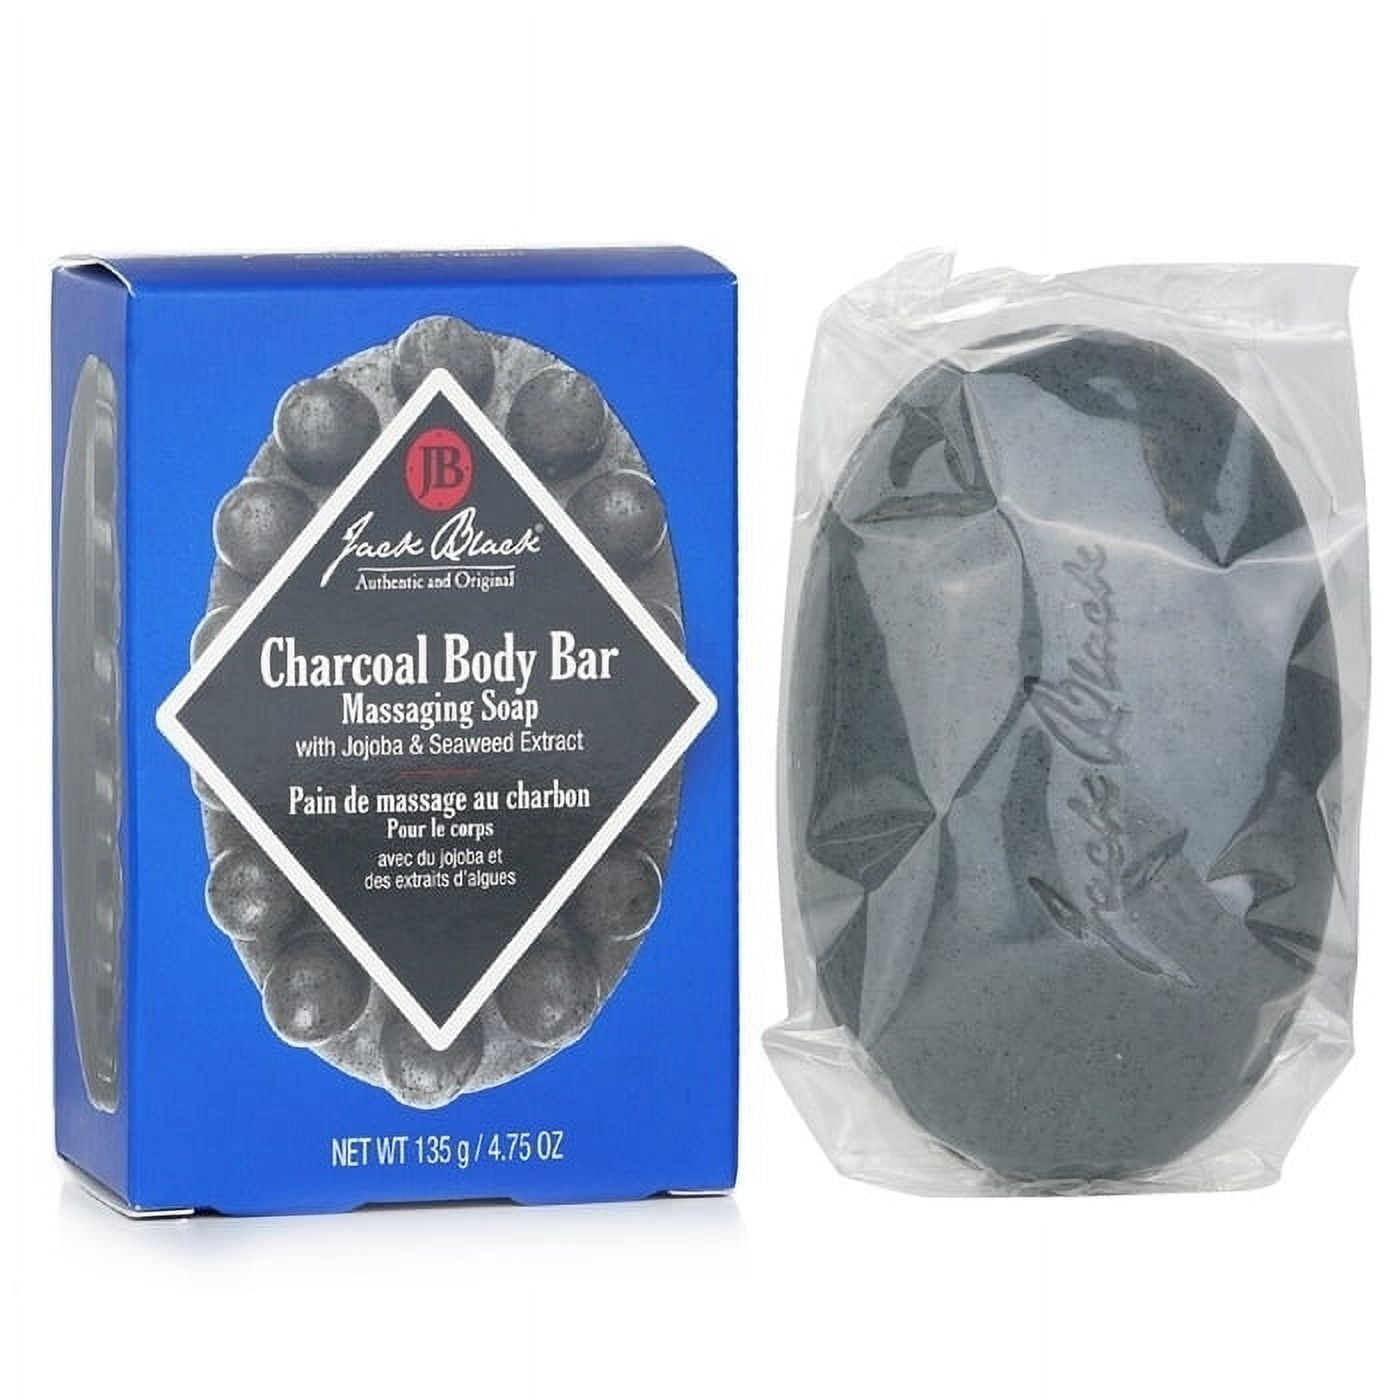 Charcoal Body Bar by Ombré Men